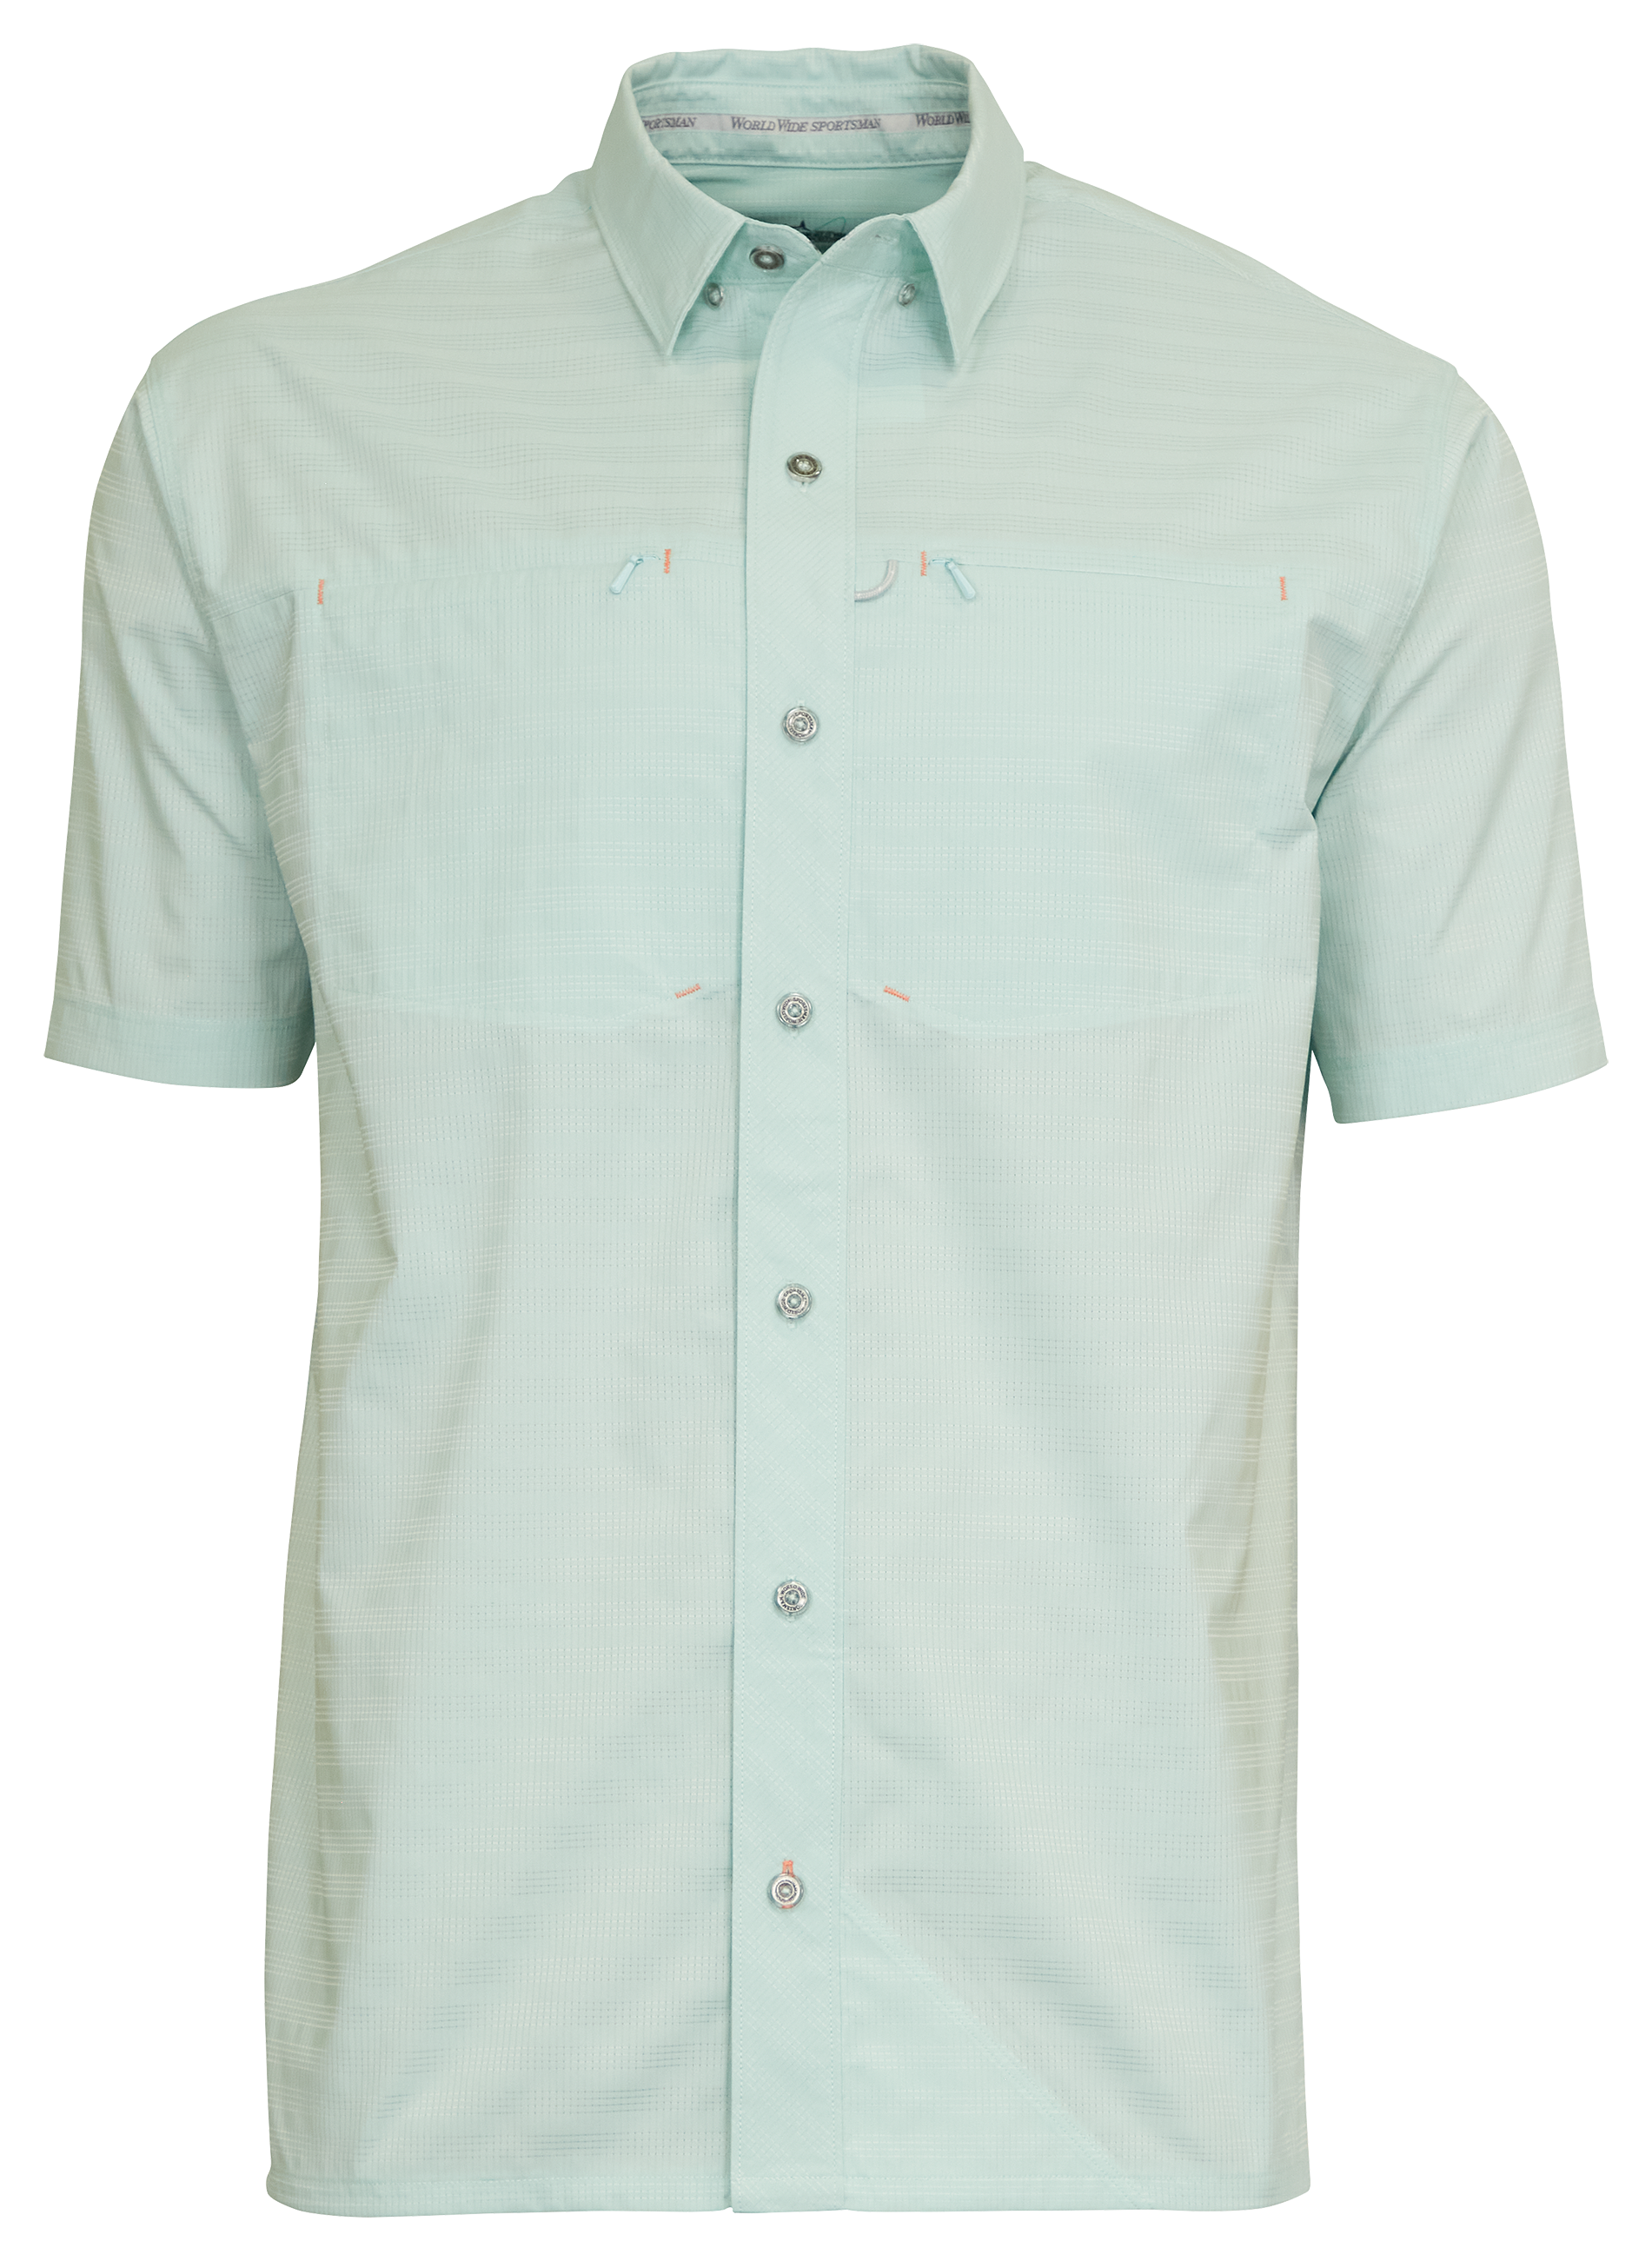 World Wide Sportsman Seacrest 2-Pocket Short-Sleeve Button-Down Shirt for Men - Harbor Gray - 2XL